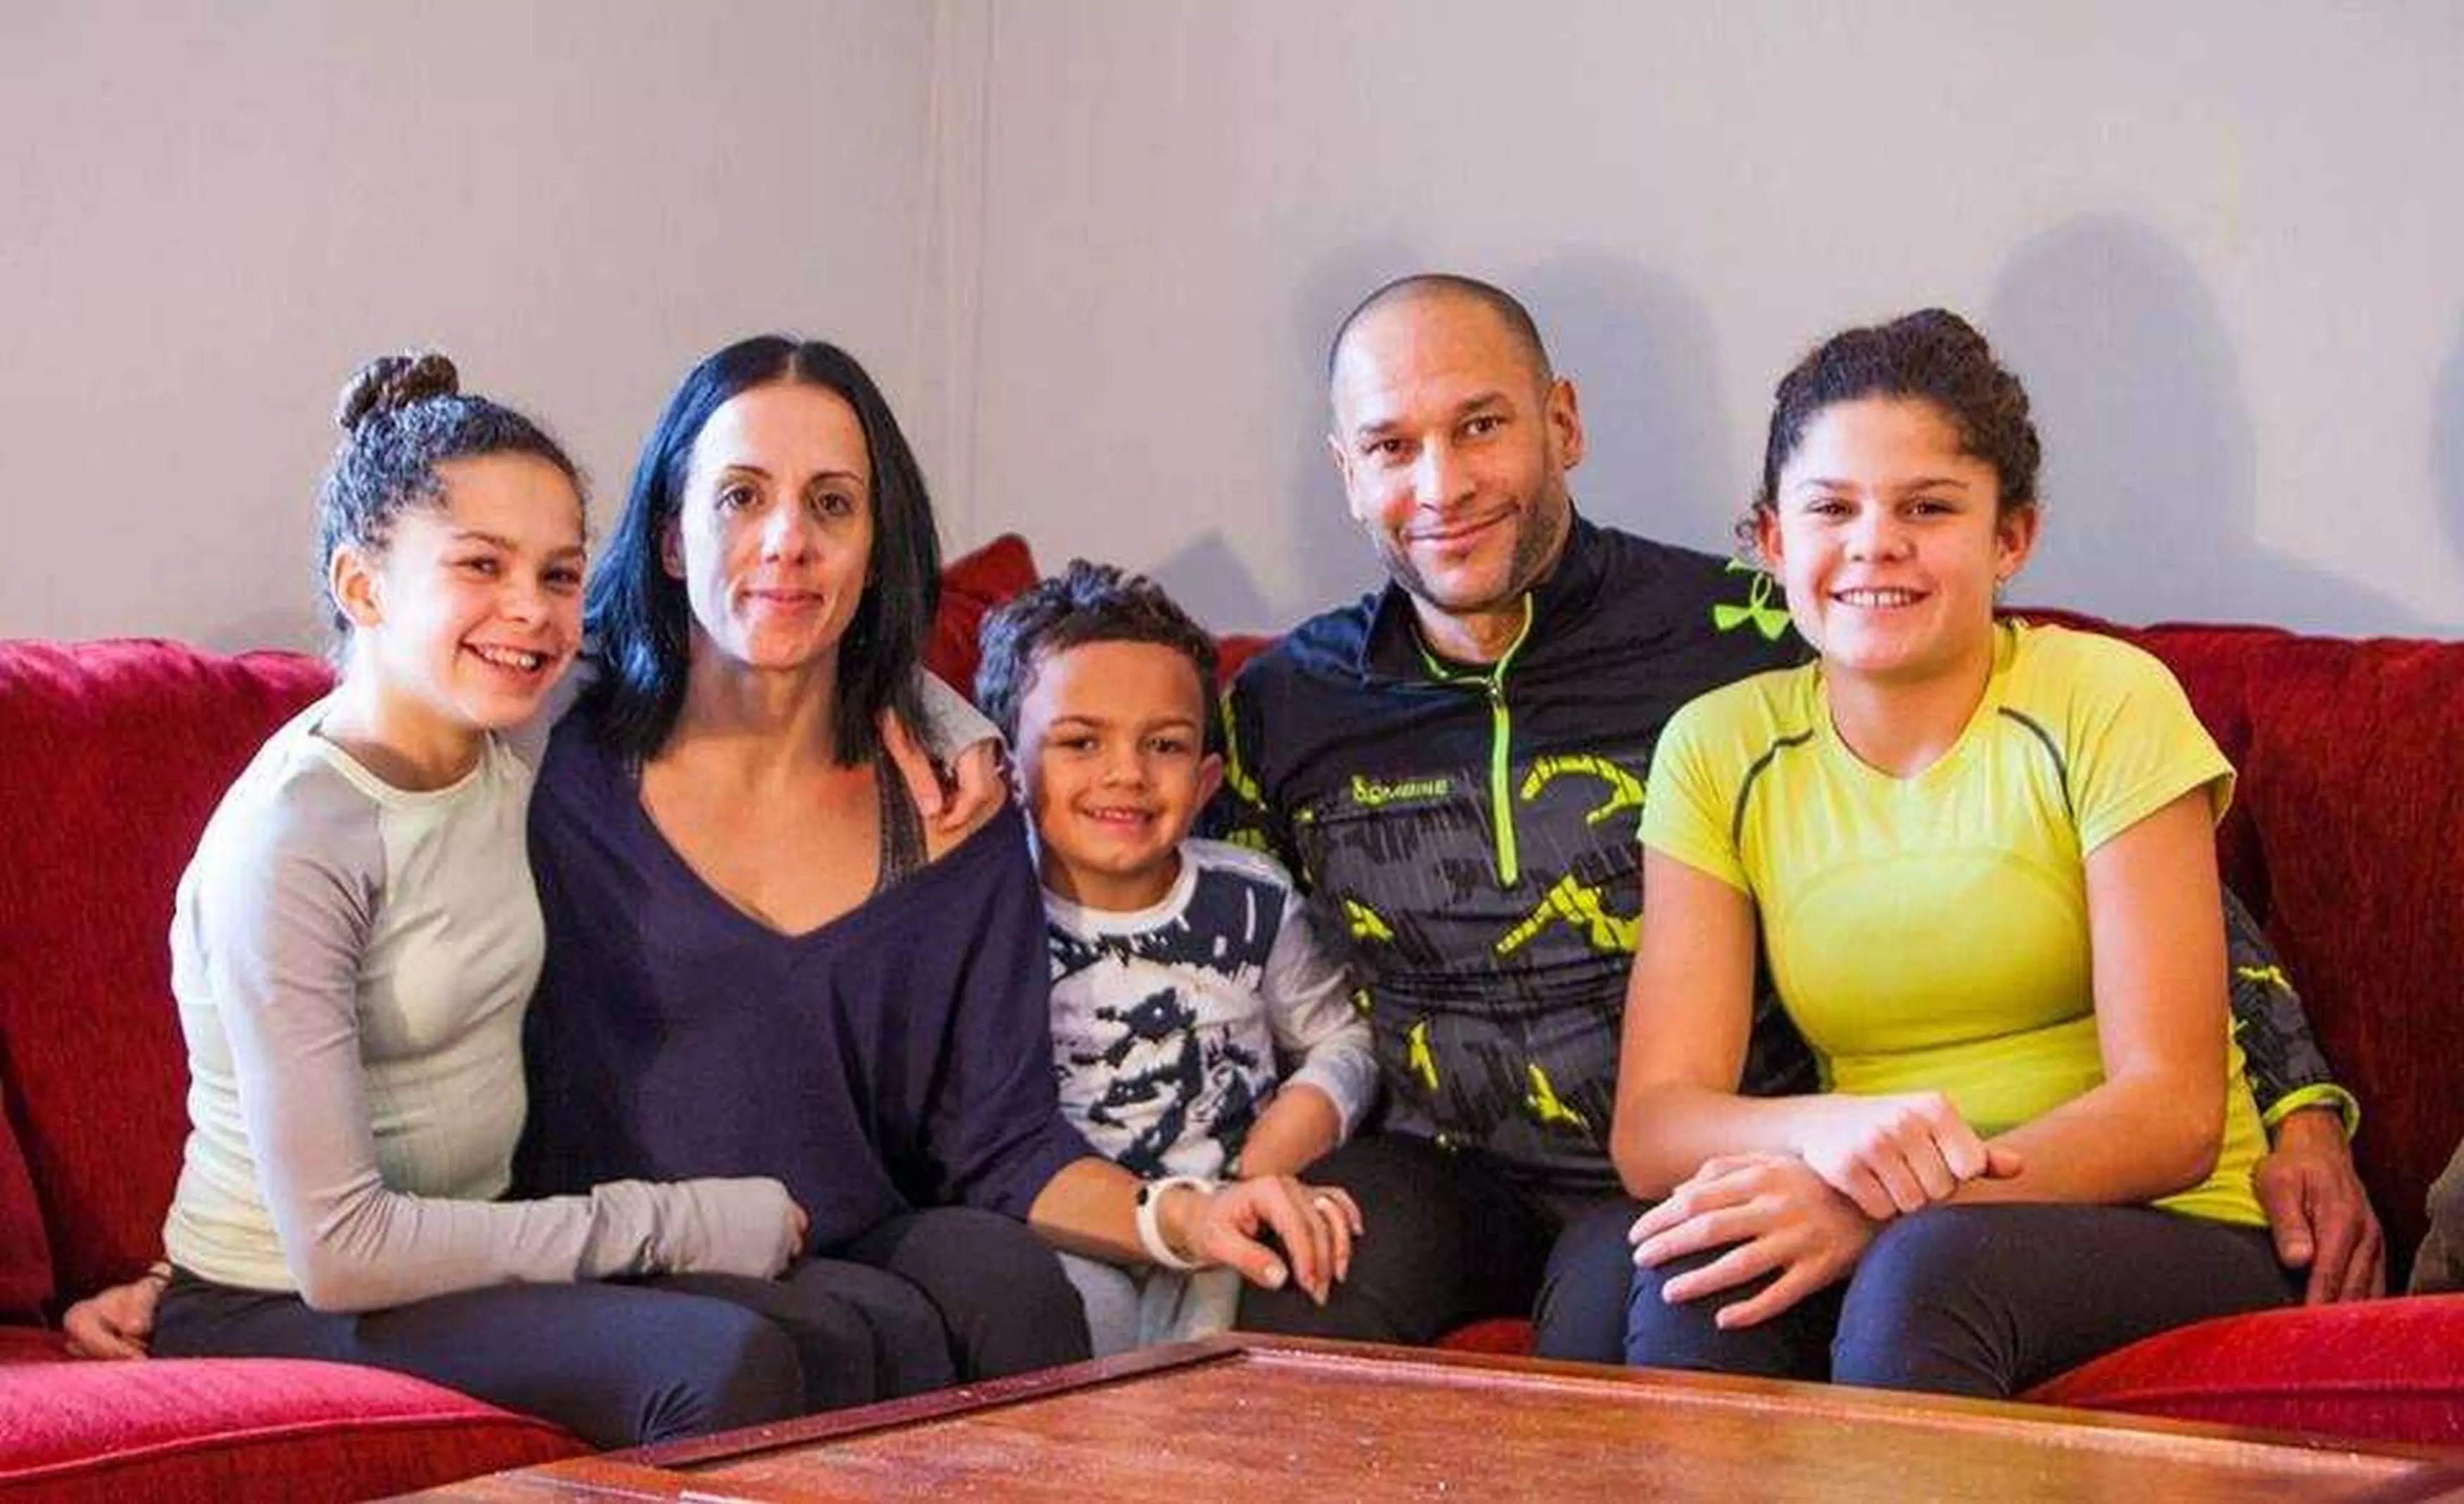 John DePass, 46, with wife Dora, 45, and their three children Michaila, 15, Sierra, 14 and Aniken, 7.